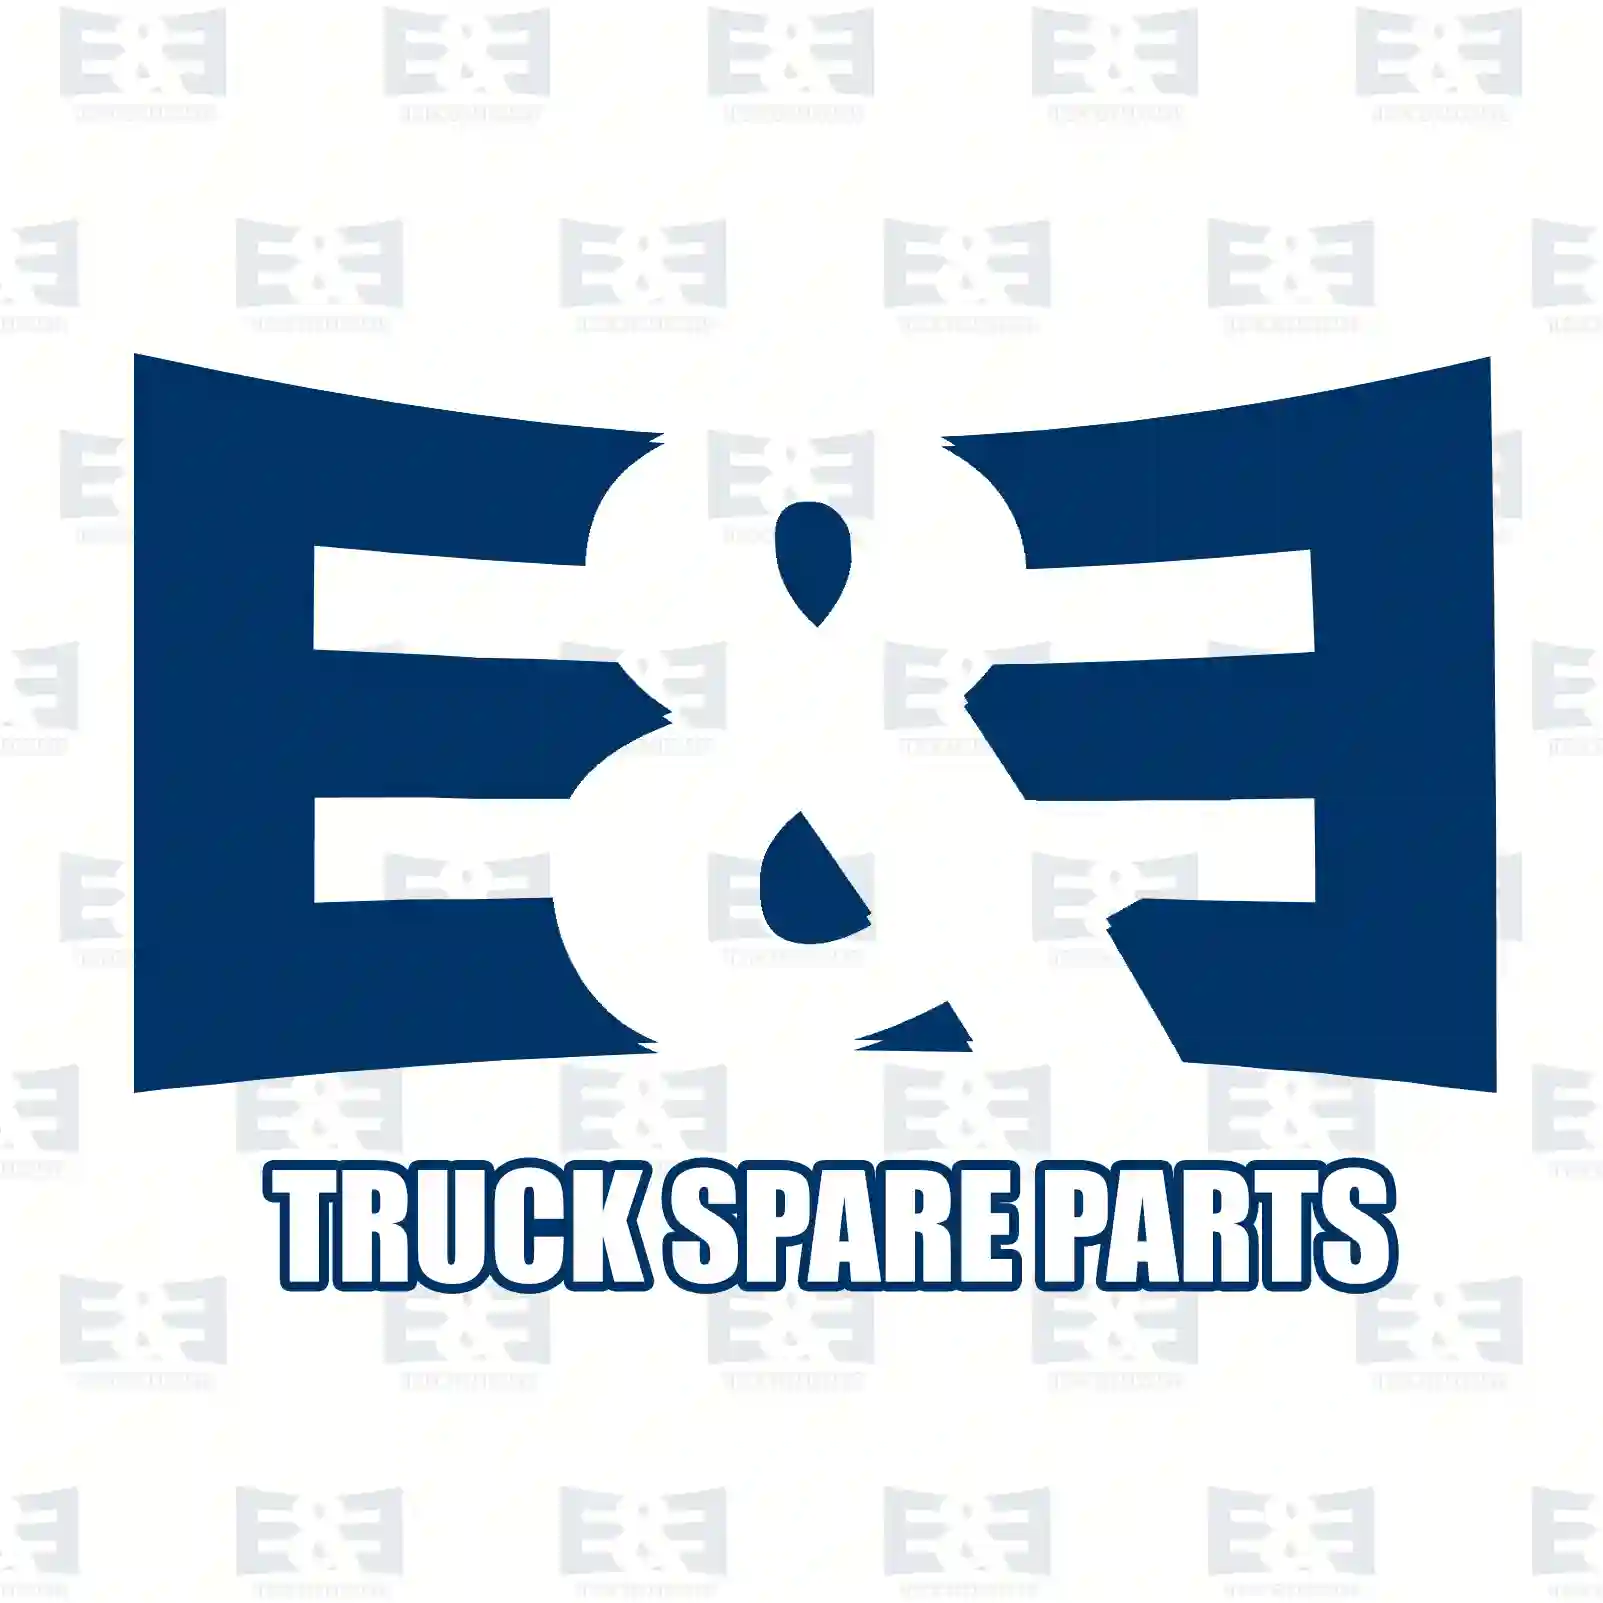 Belt tensioner, complete, with multiribbed belt, 2E2201147, 1859657S4, 2197005S4 ||  2E2201147 E&E Truck Spare Parts | Truck Spare Parts, Auotomotive Spare Parts Belt tensioner, complete, with multiribbed belt, 2E2201147, 1859657S4, 2197005S4 ||  2E2201147 E&E Truck Spare Parts | Truck Spare Parts, Auotomotive Spare Parts